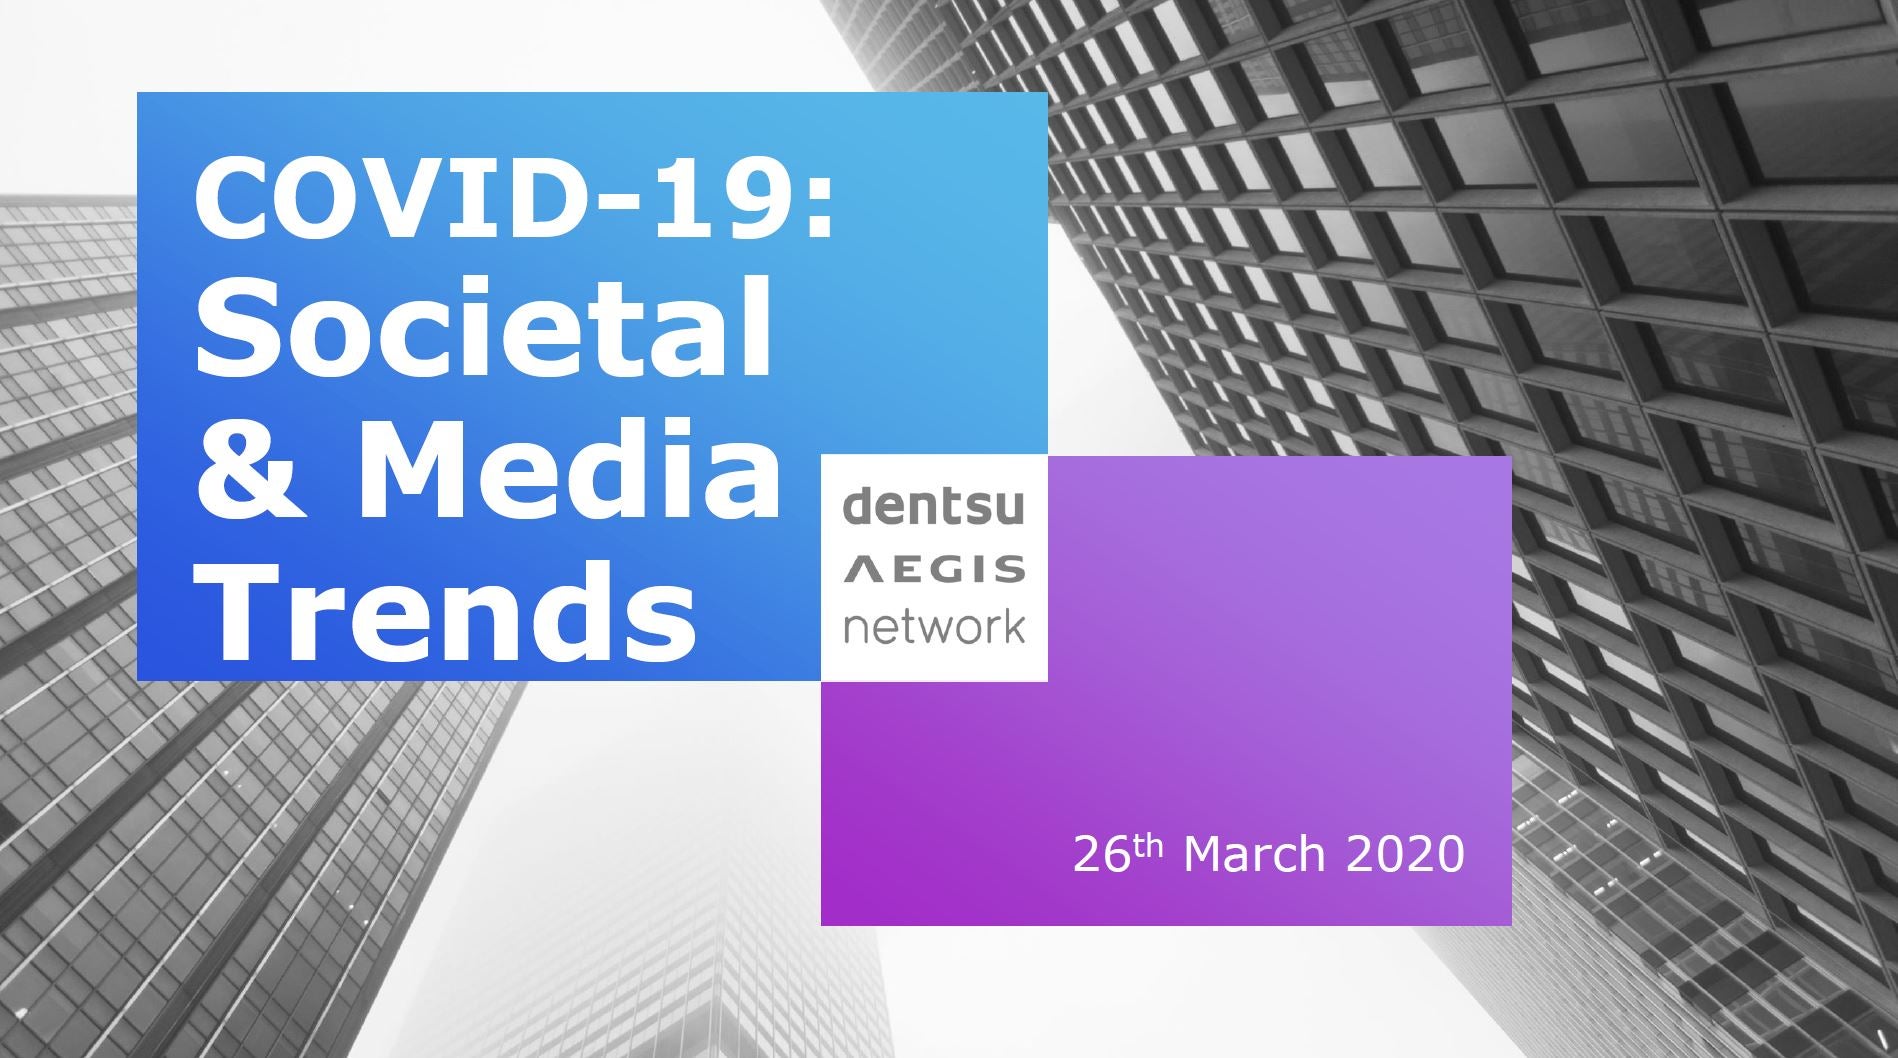 COVID 19 Societal & Media Trends Issue one. Societal and media trends in Ireland in light of COVID-19.